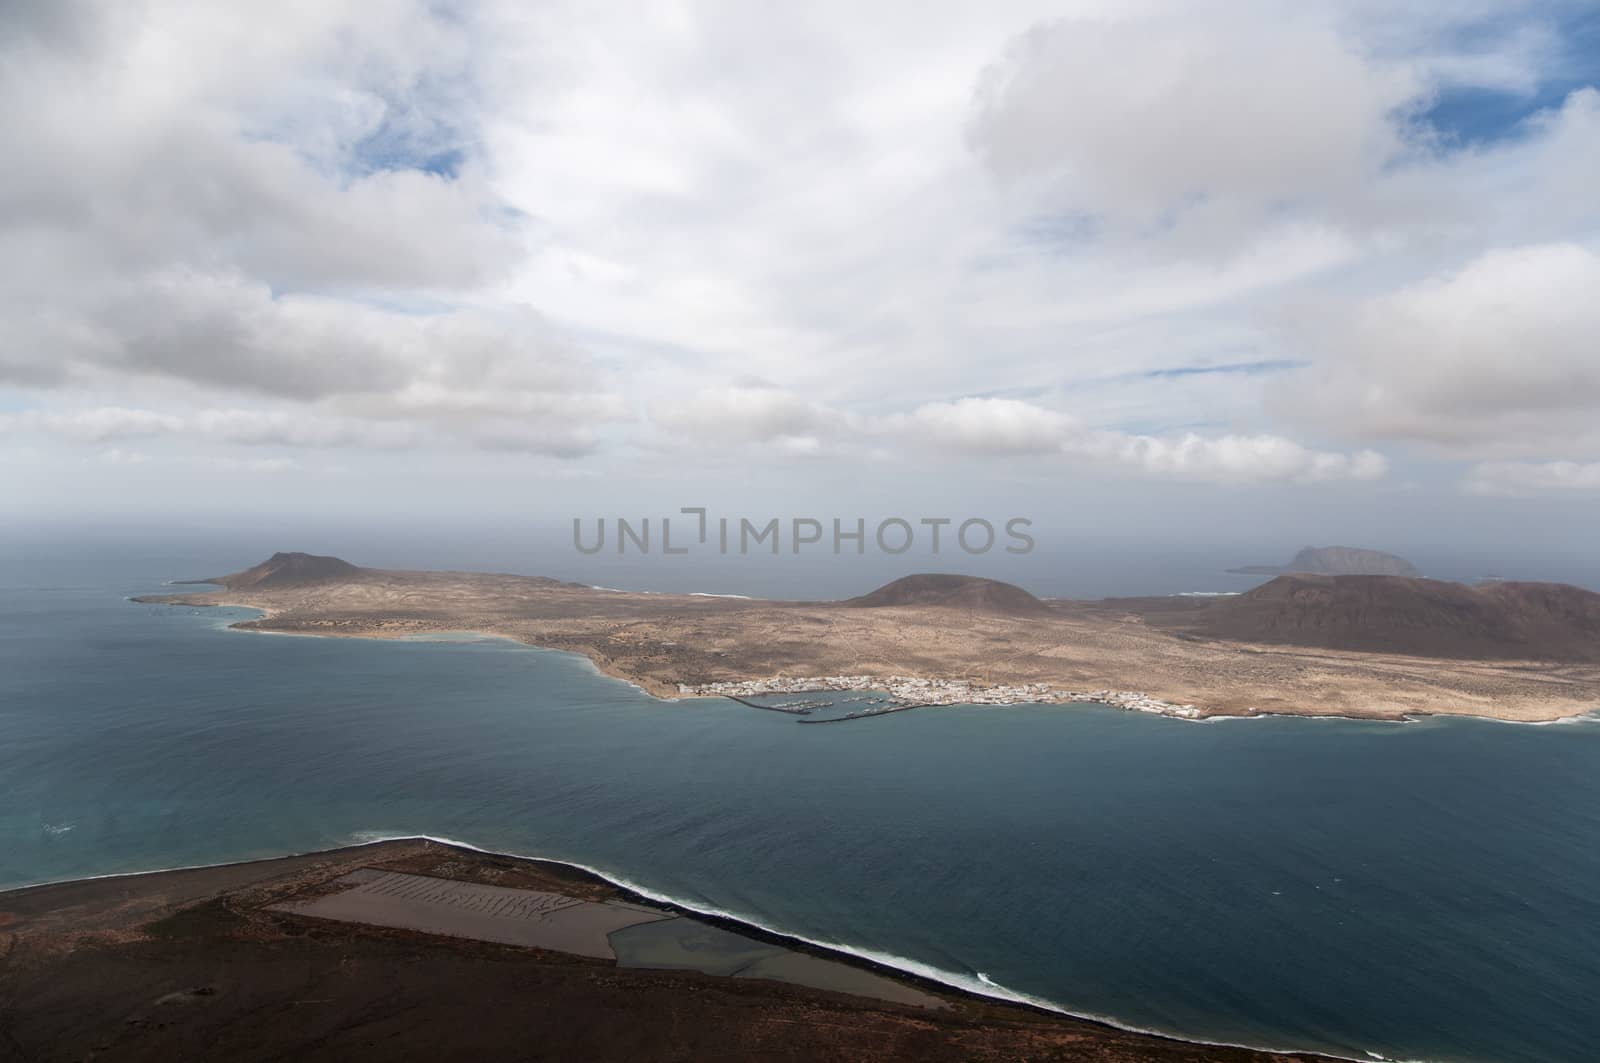 La Graciosa Island seen from the viewpoint of Lanzarote